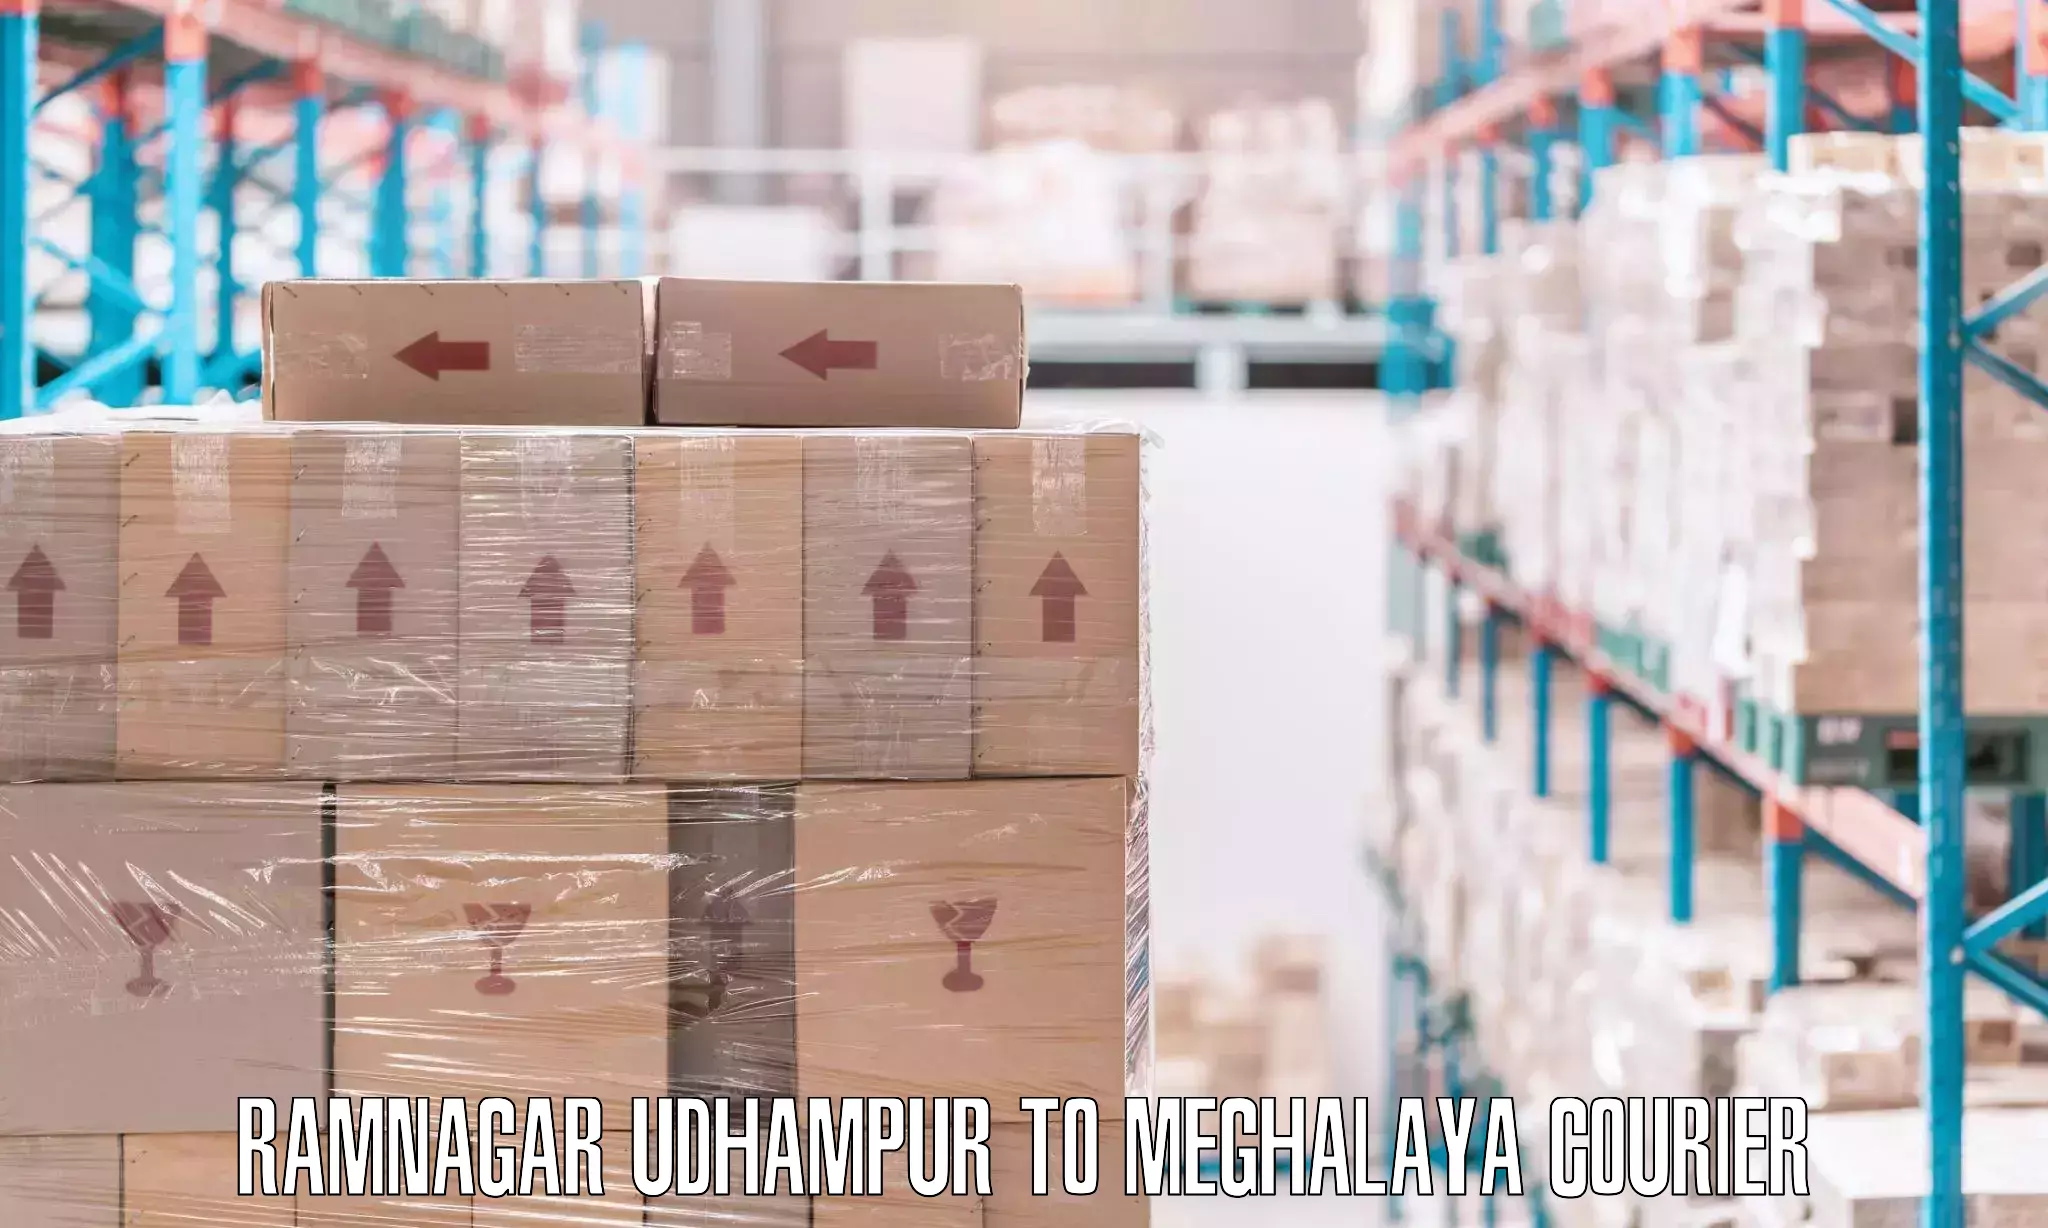 Professional moving company Ramnagar Udhampur to Meghalaya